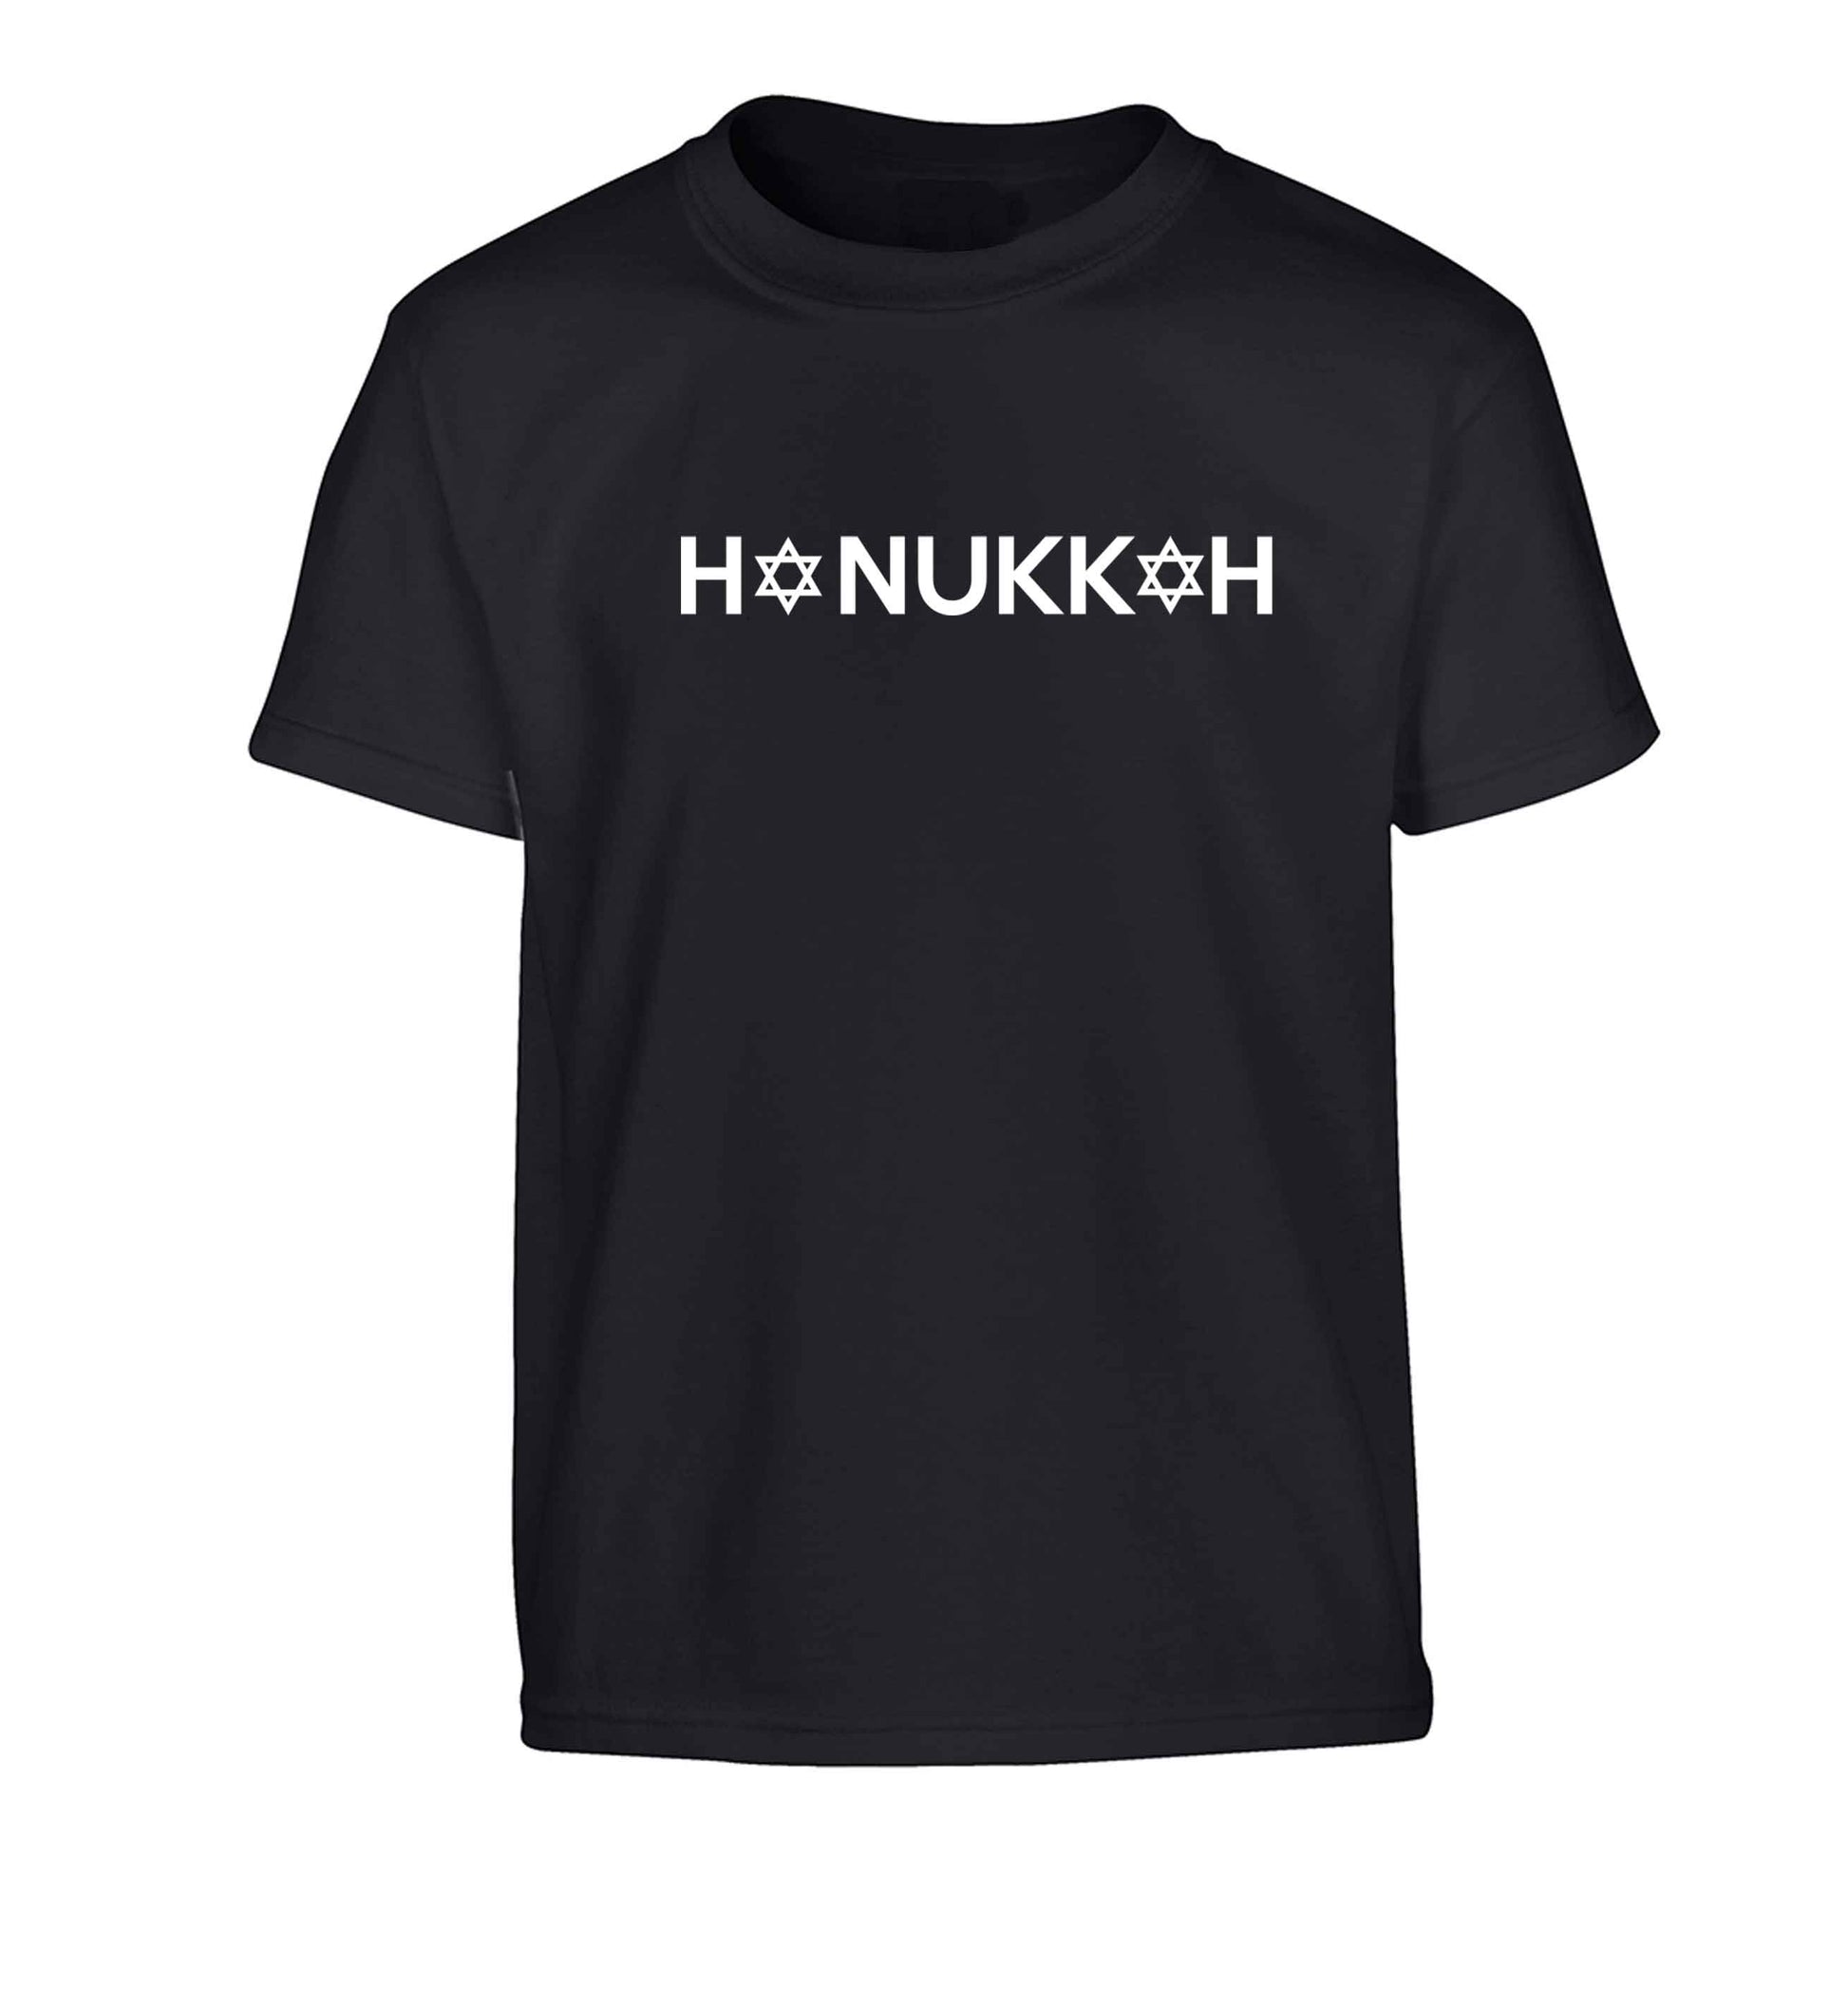 Hanukkah star of david Children's black Tshirt 12-13 Years